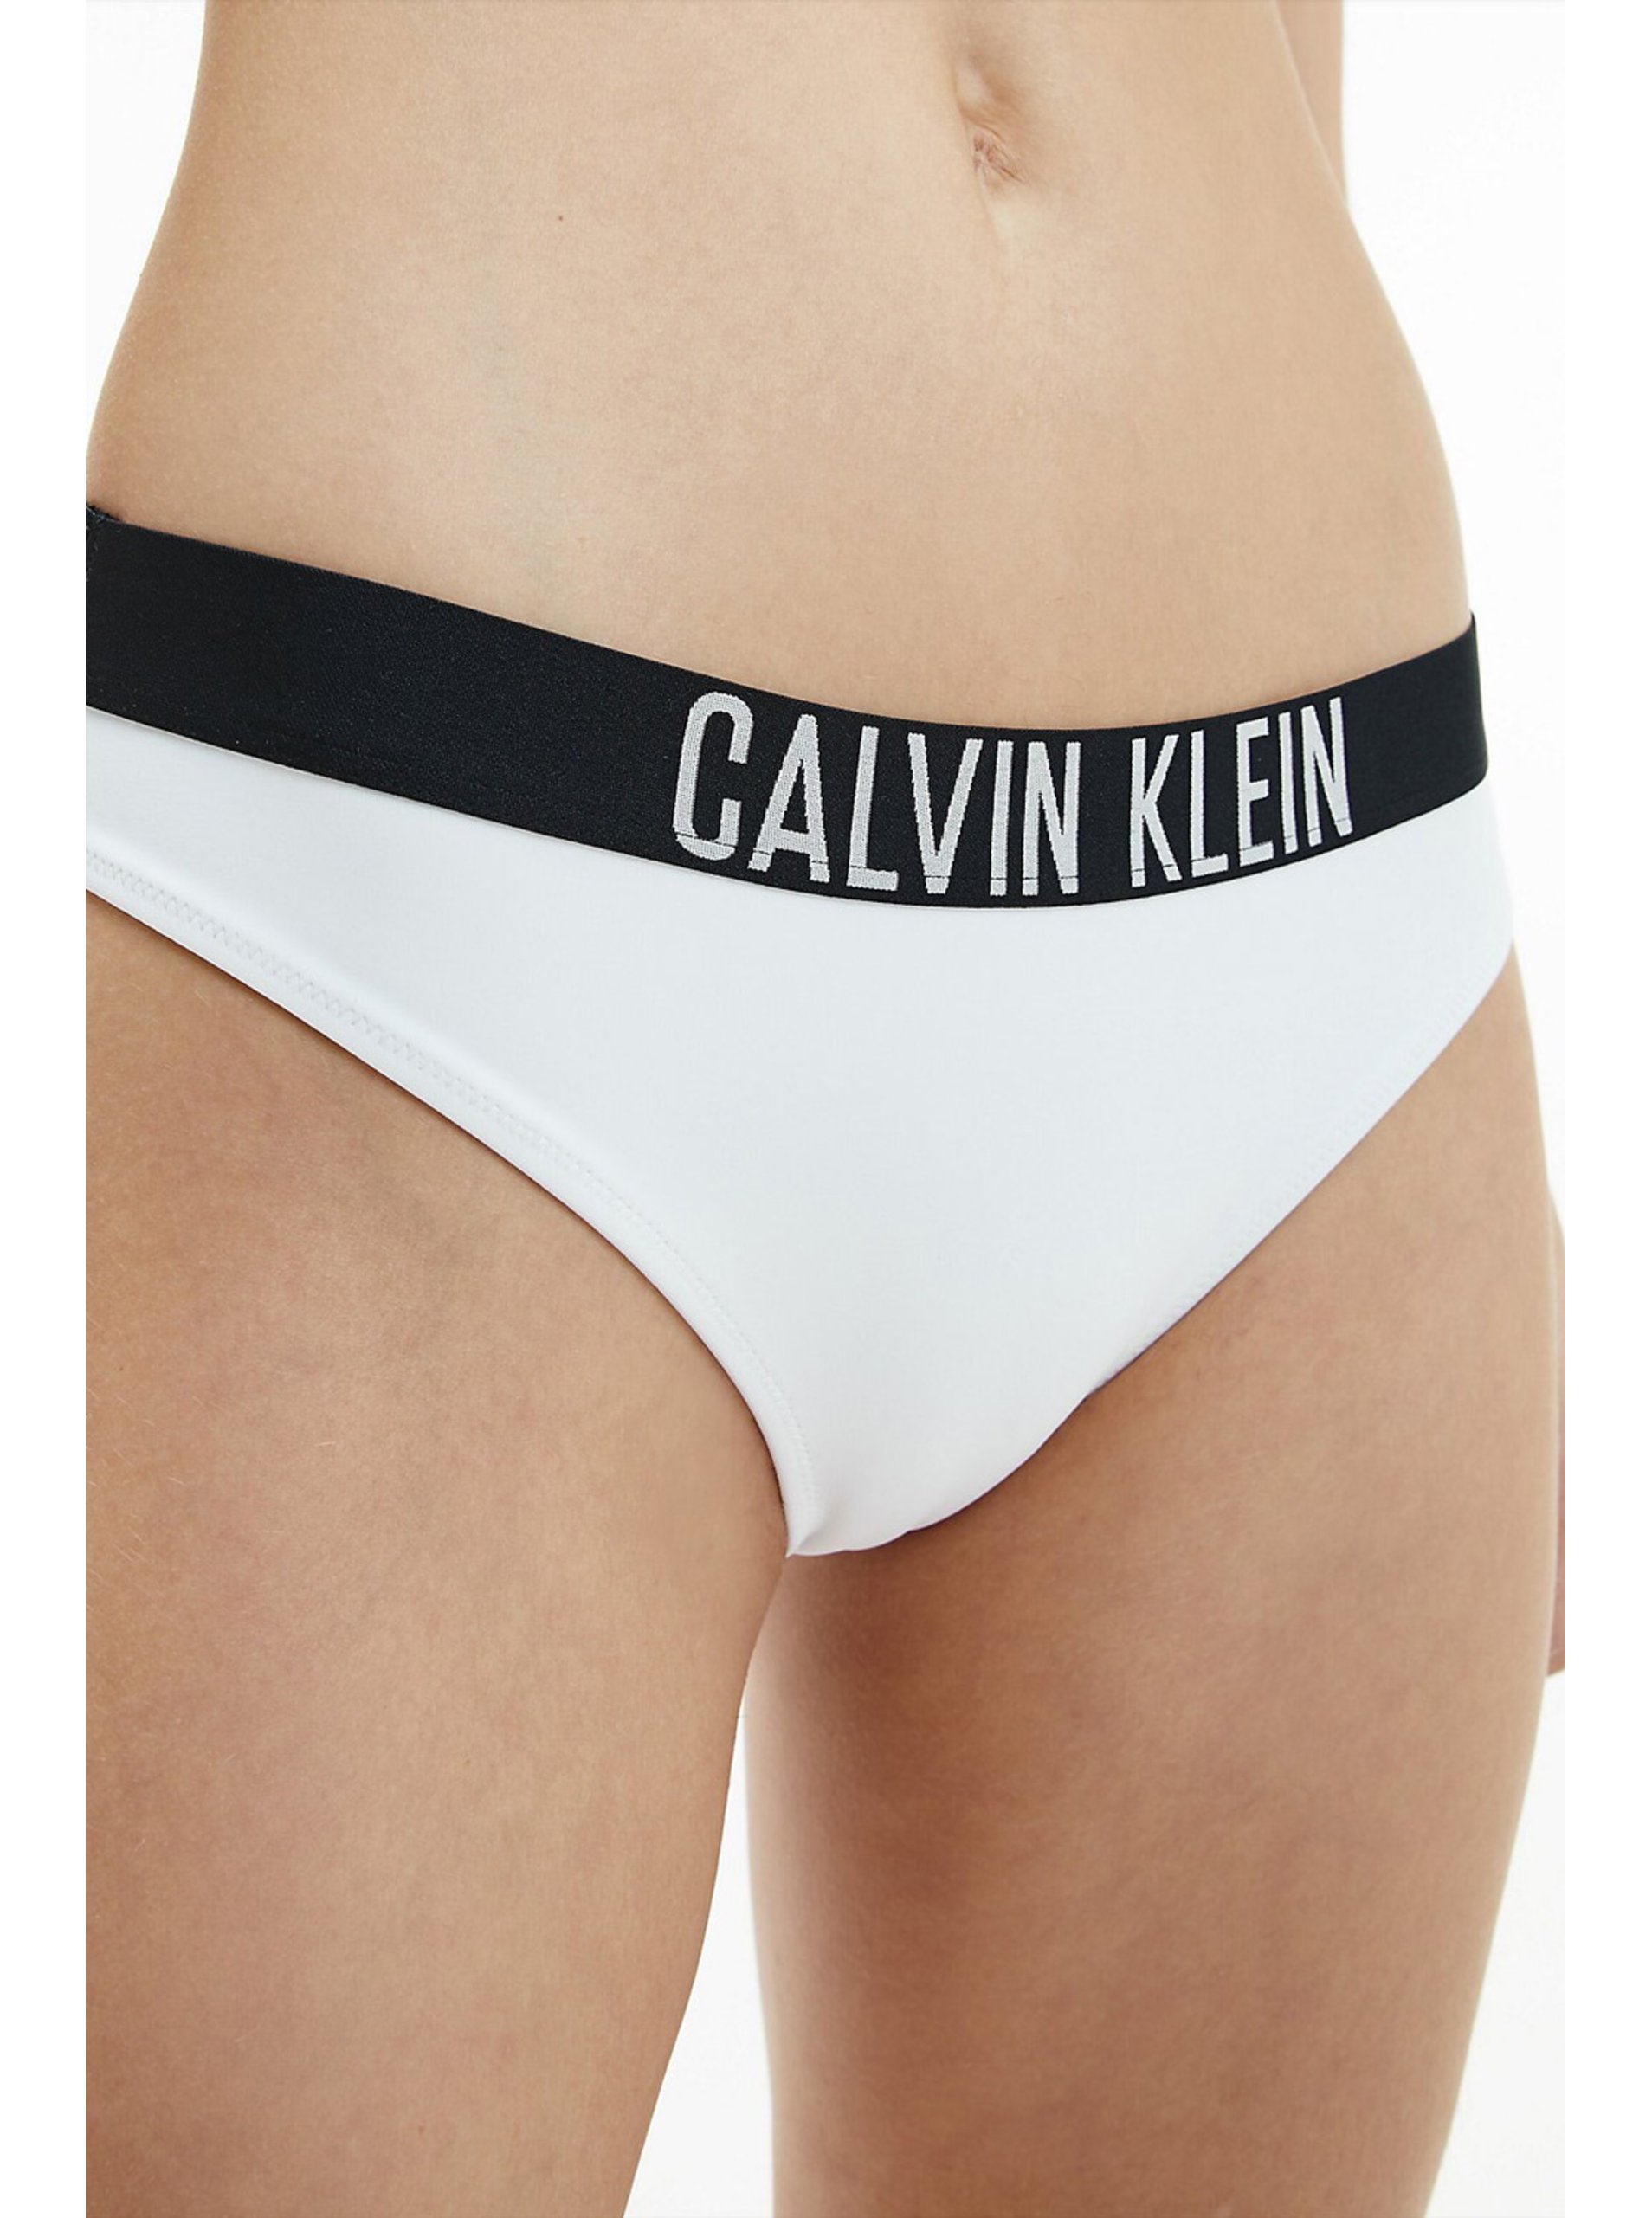 Lacno Calvin Klein biele spodný diel plaviek Classic Bikini